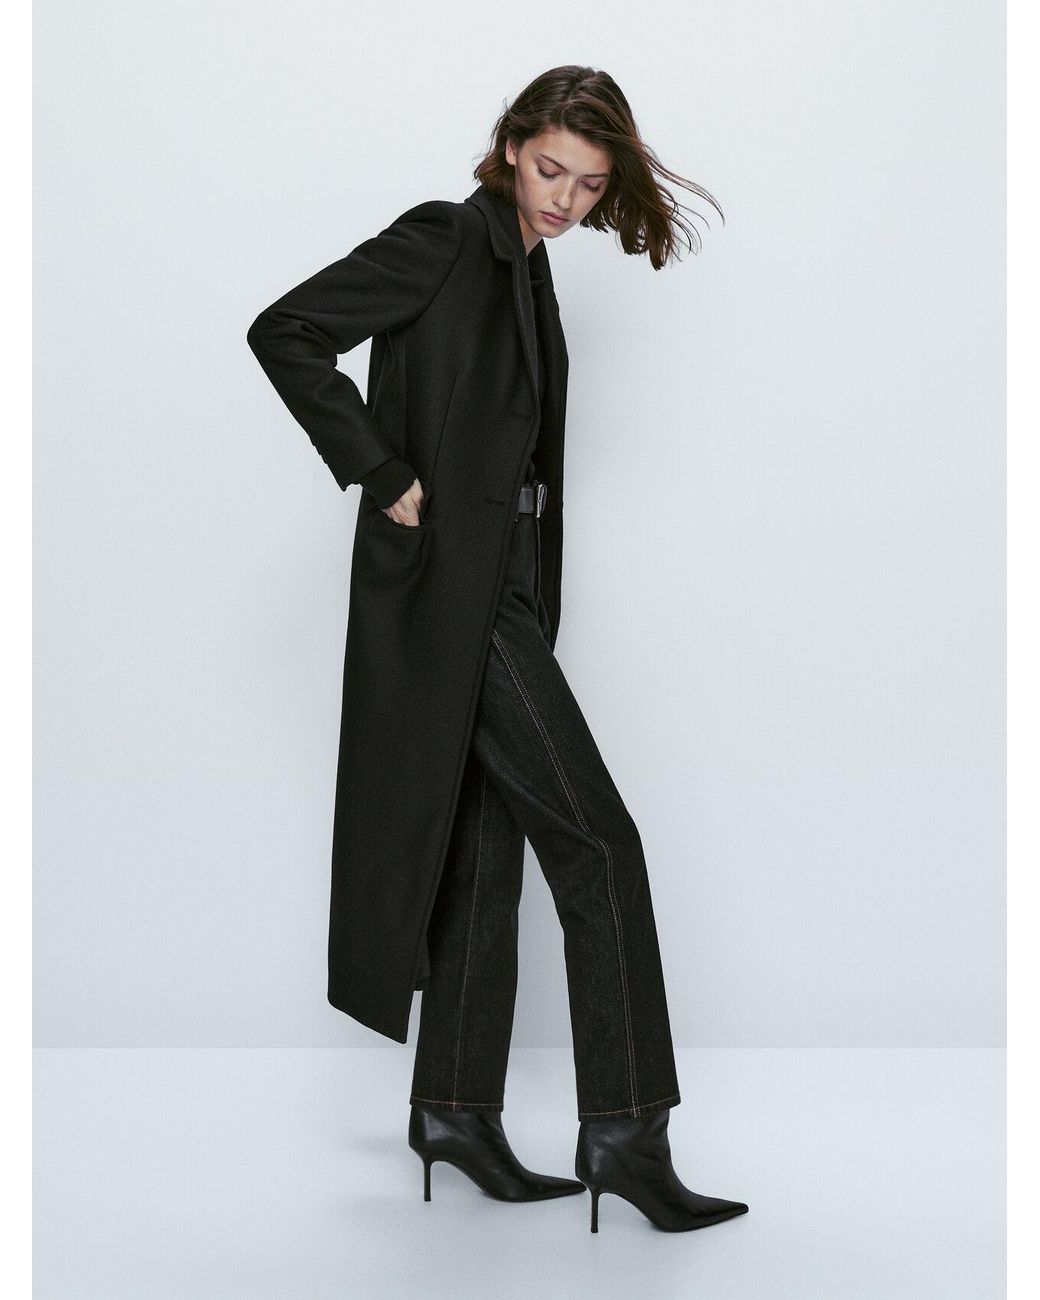 MASSIMO DUTTI Tailored Wool Blend Coat in Black | Lyst